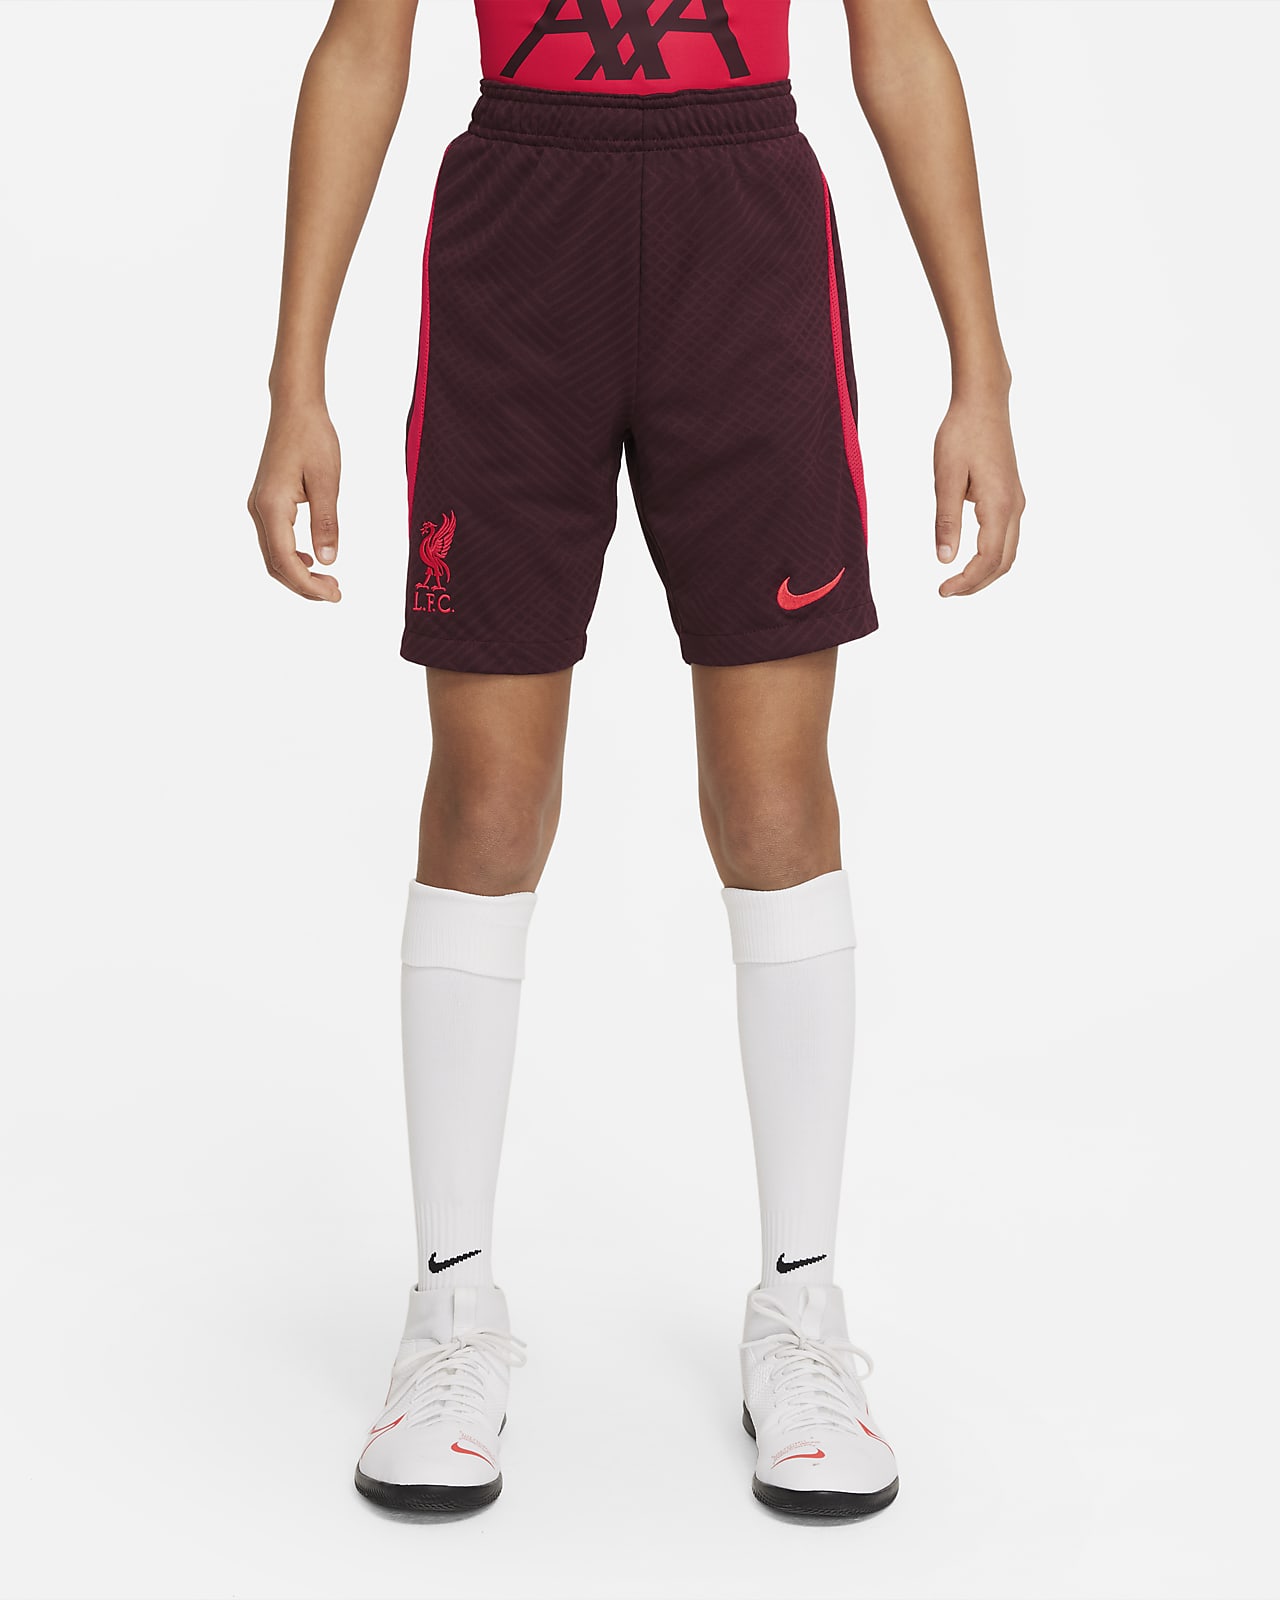 Shorts de fútbol Nike Dri-FIT para niños talla grande del Liverpool FC Strike